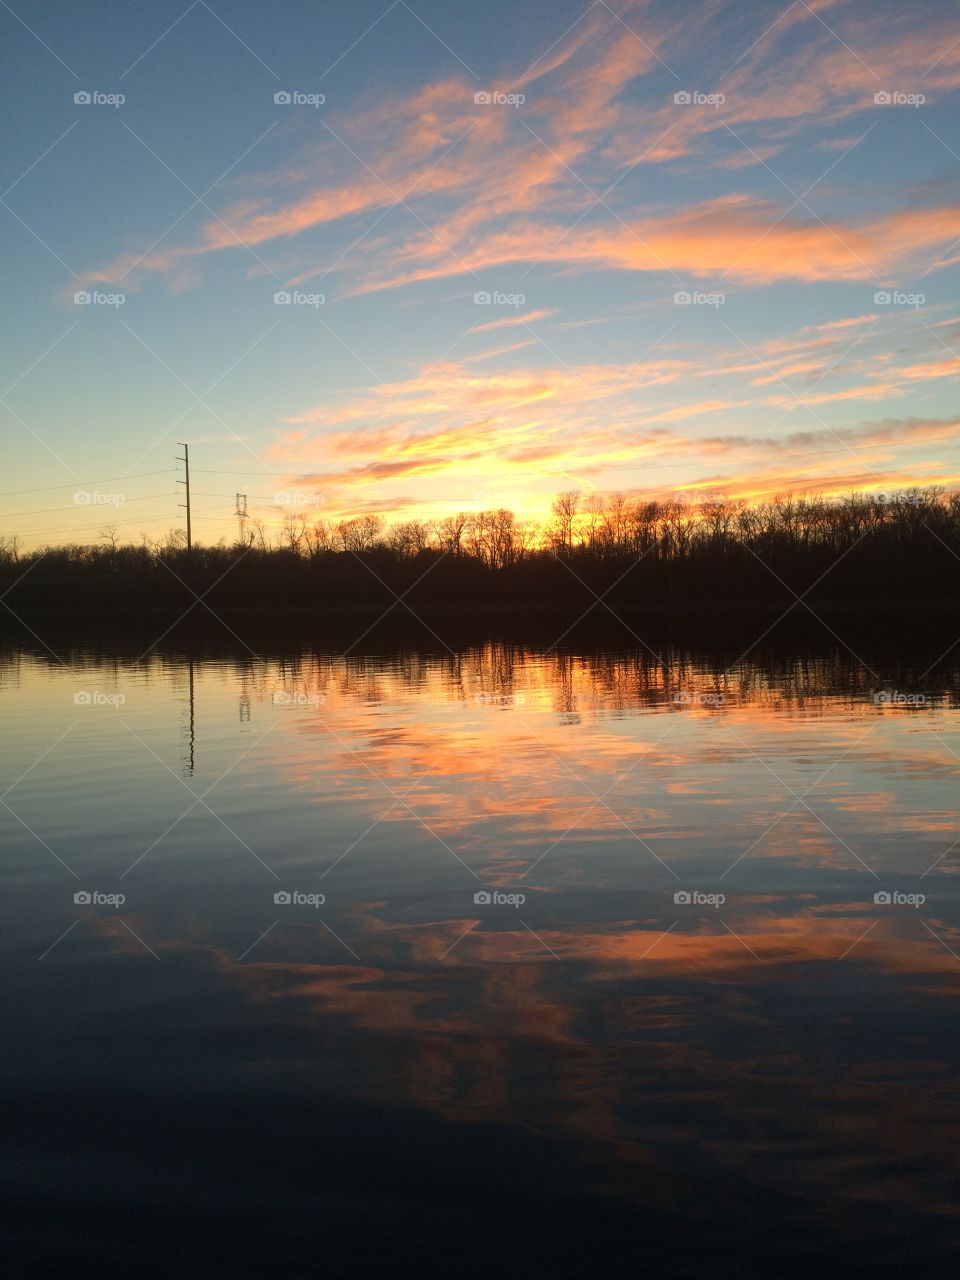 Arkansas Swepco Lake sunset